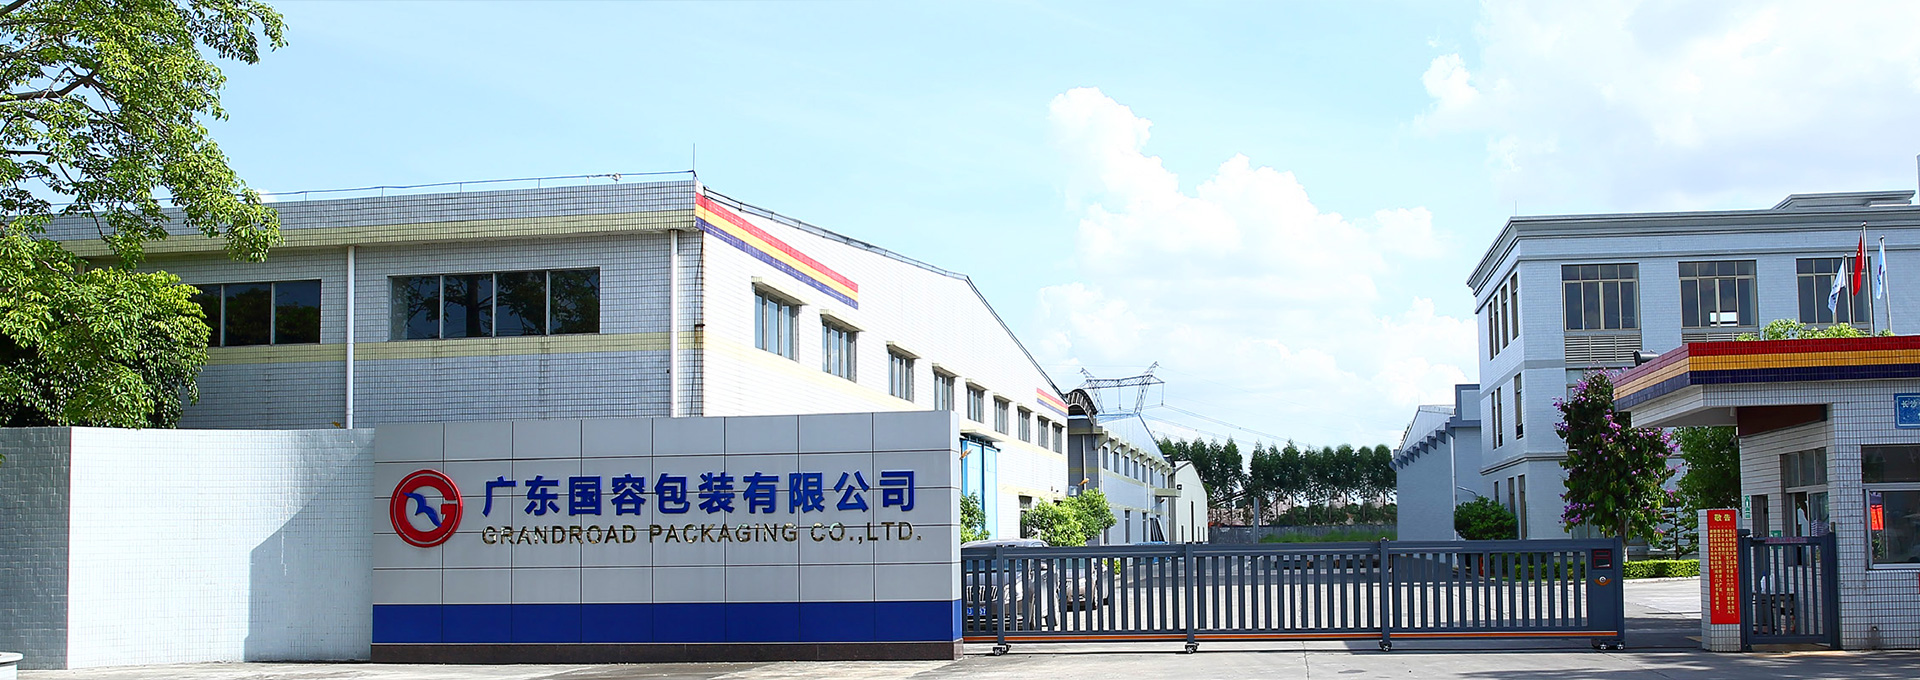 Guangdong Grandroad Packaging Co., Ltd. 